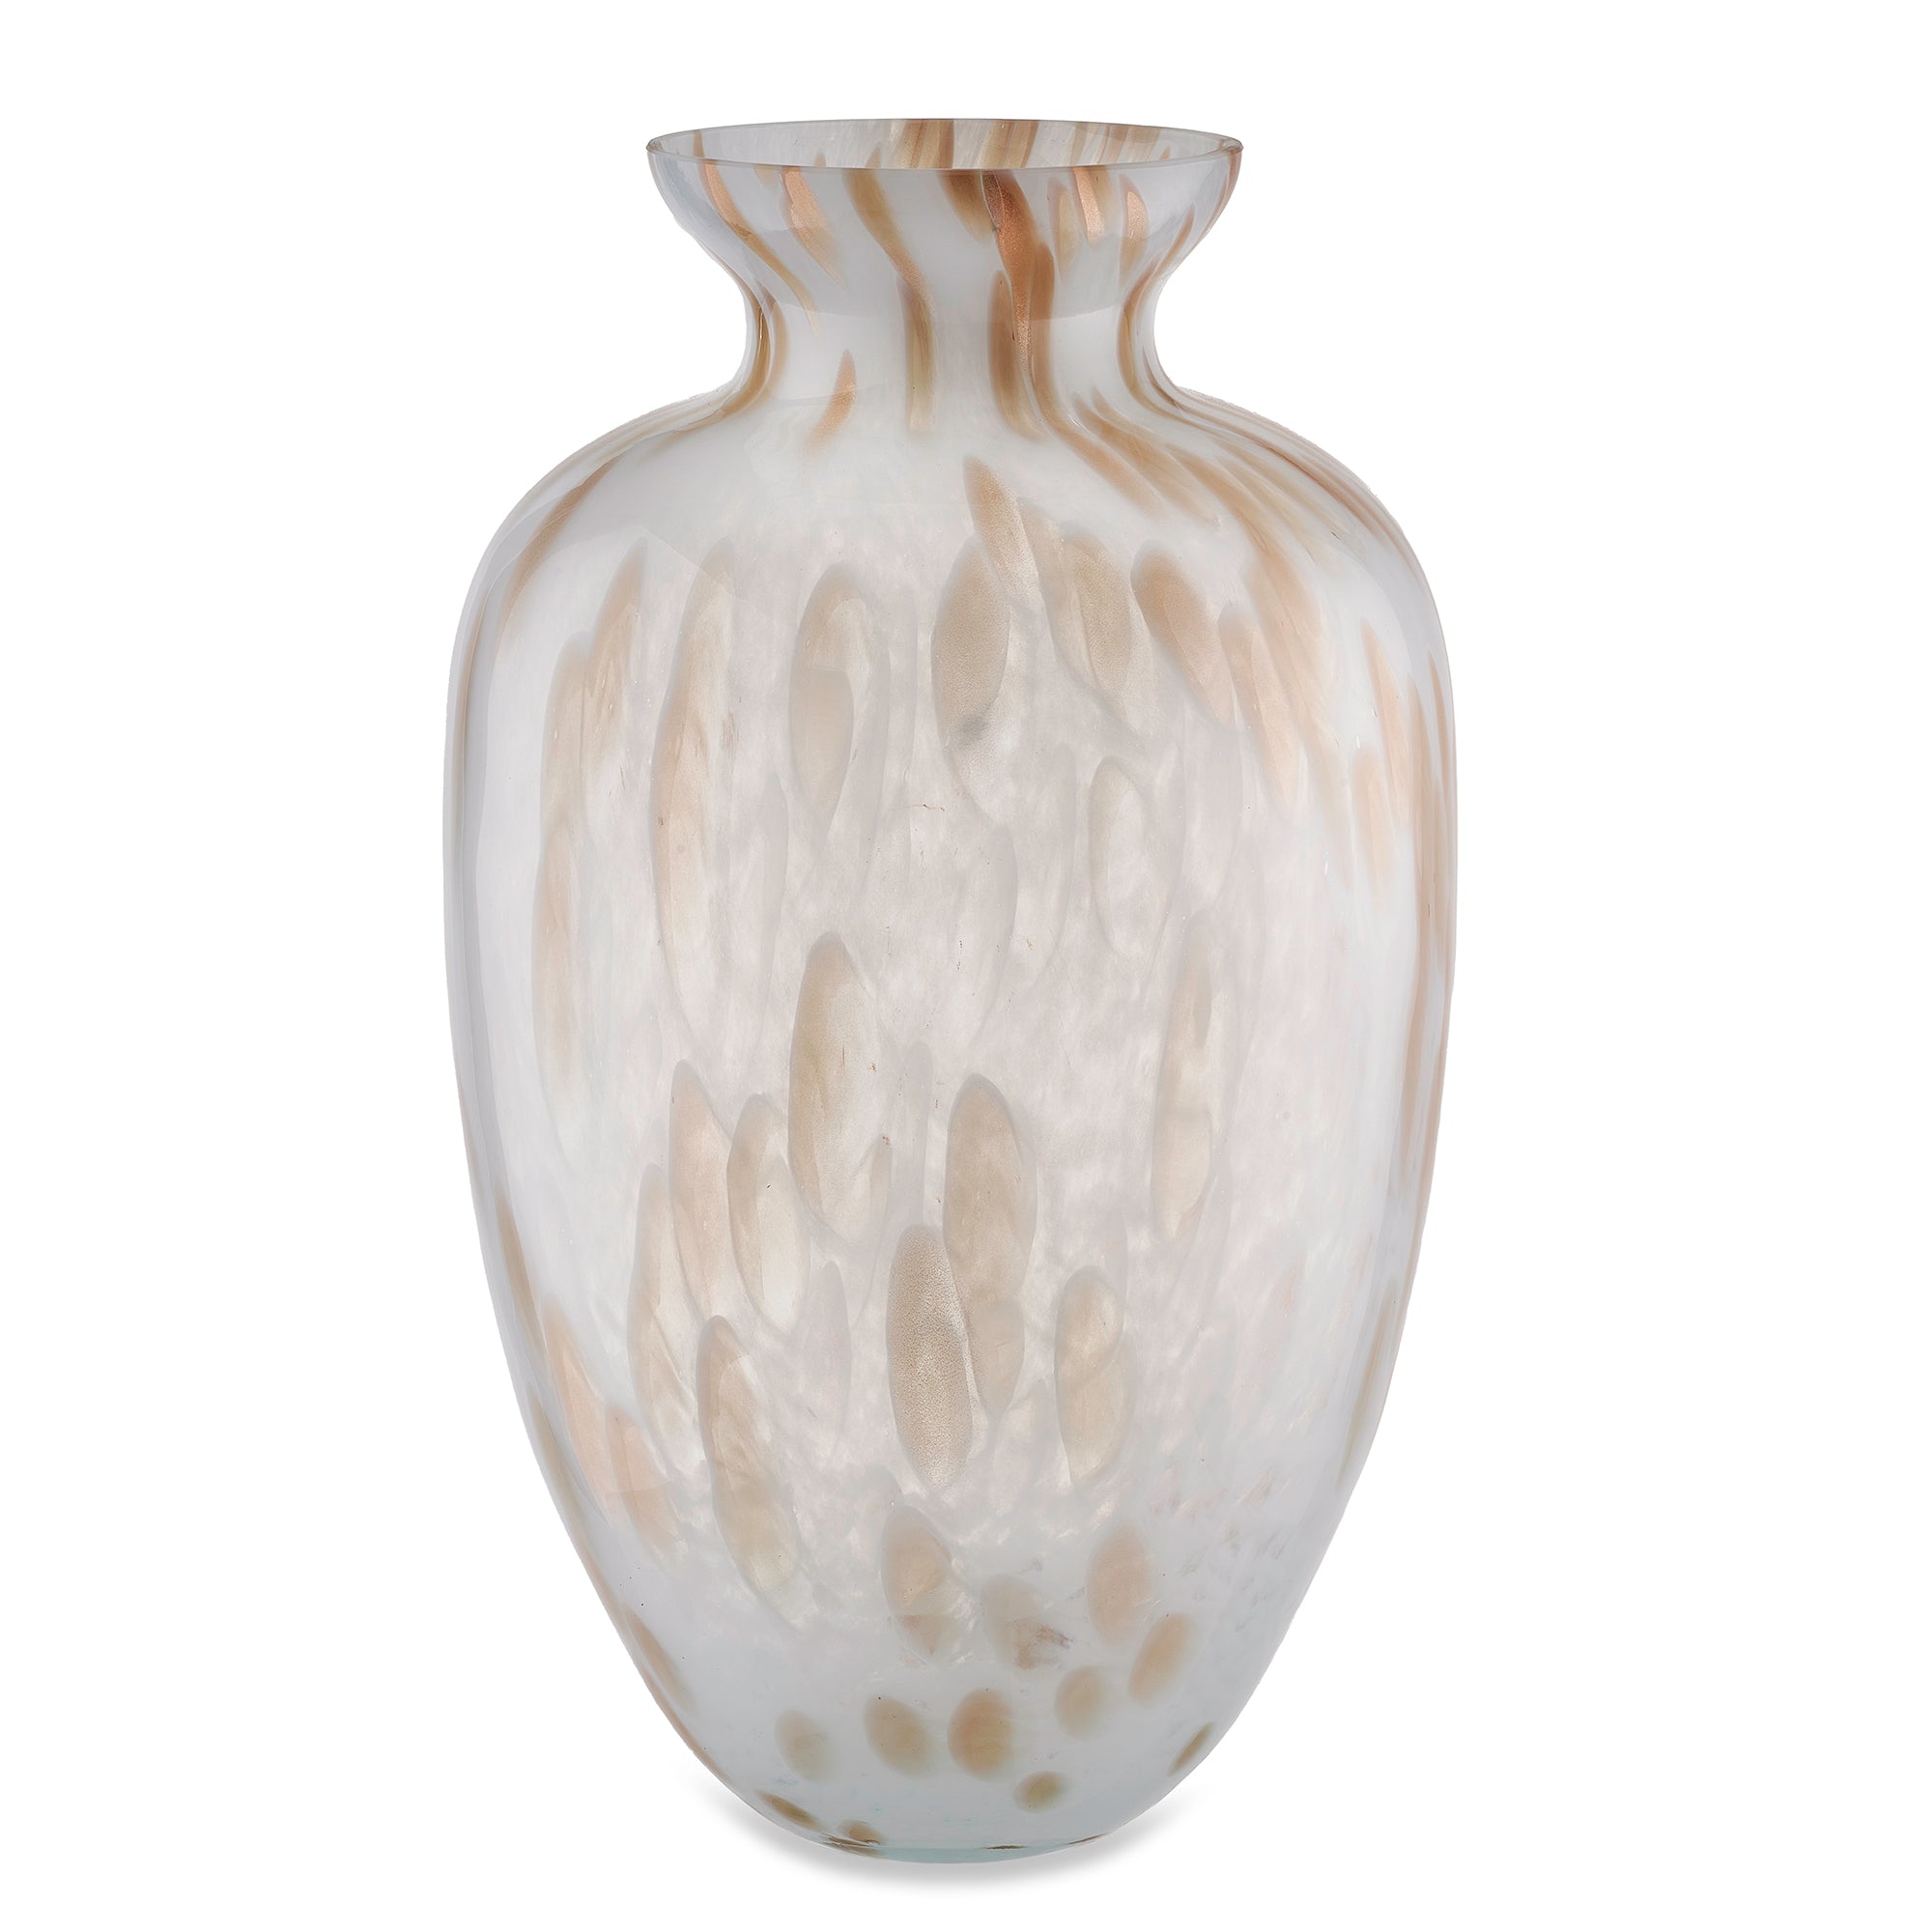 REINESSANCE jarrón artesanal blanco en cristal de Murano